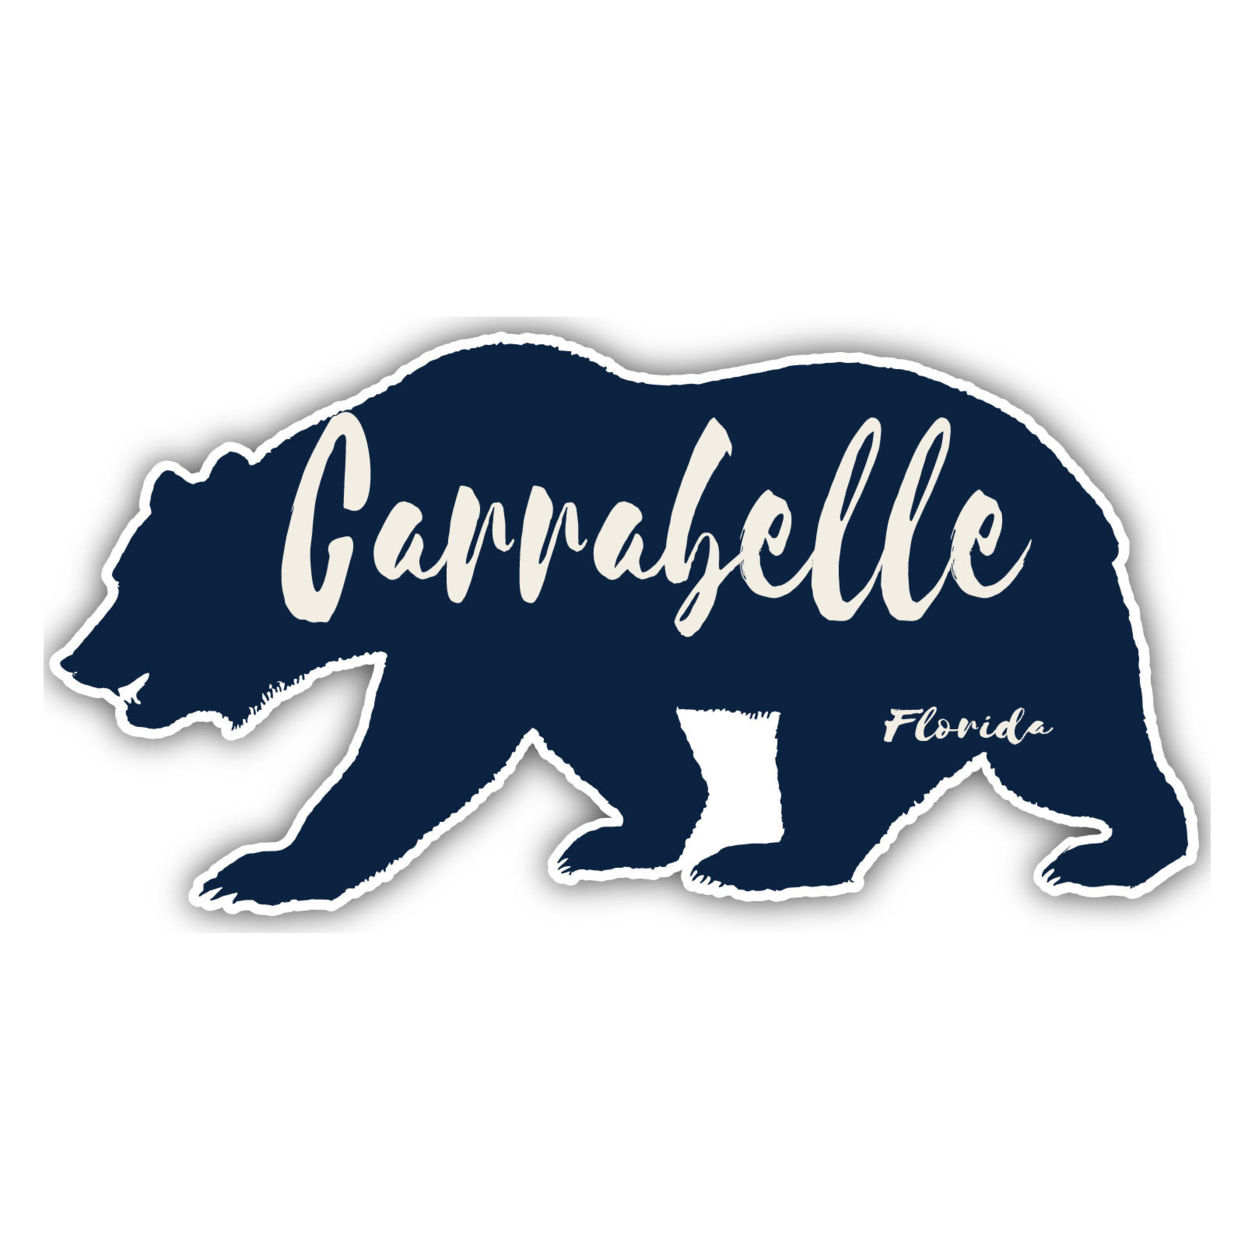 Carrabelle Florida Souvenir Decorative Stickers (Choose Theme And Size) - Single Unit, 12-Inch, Bear